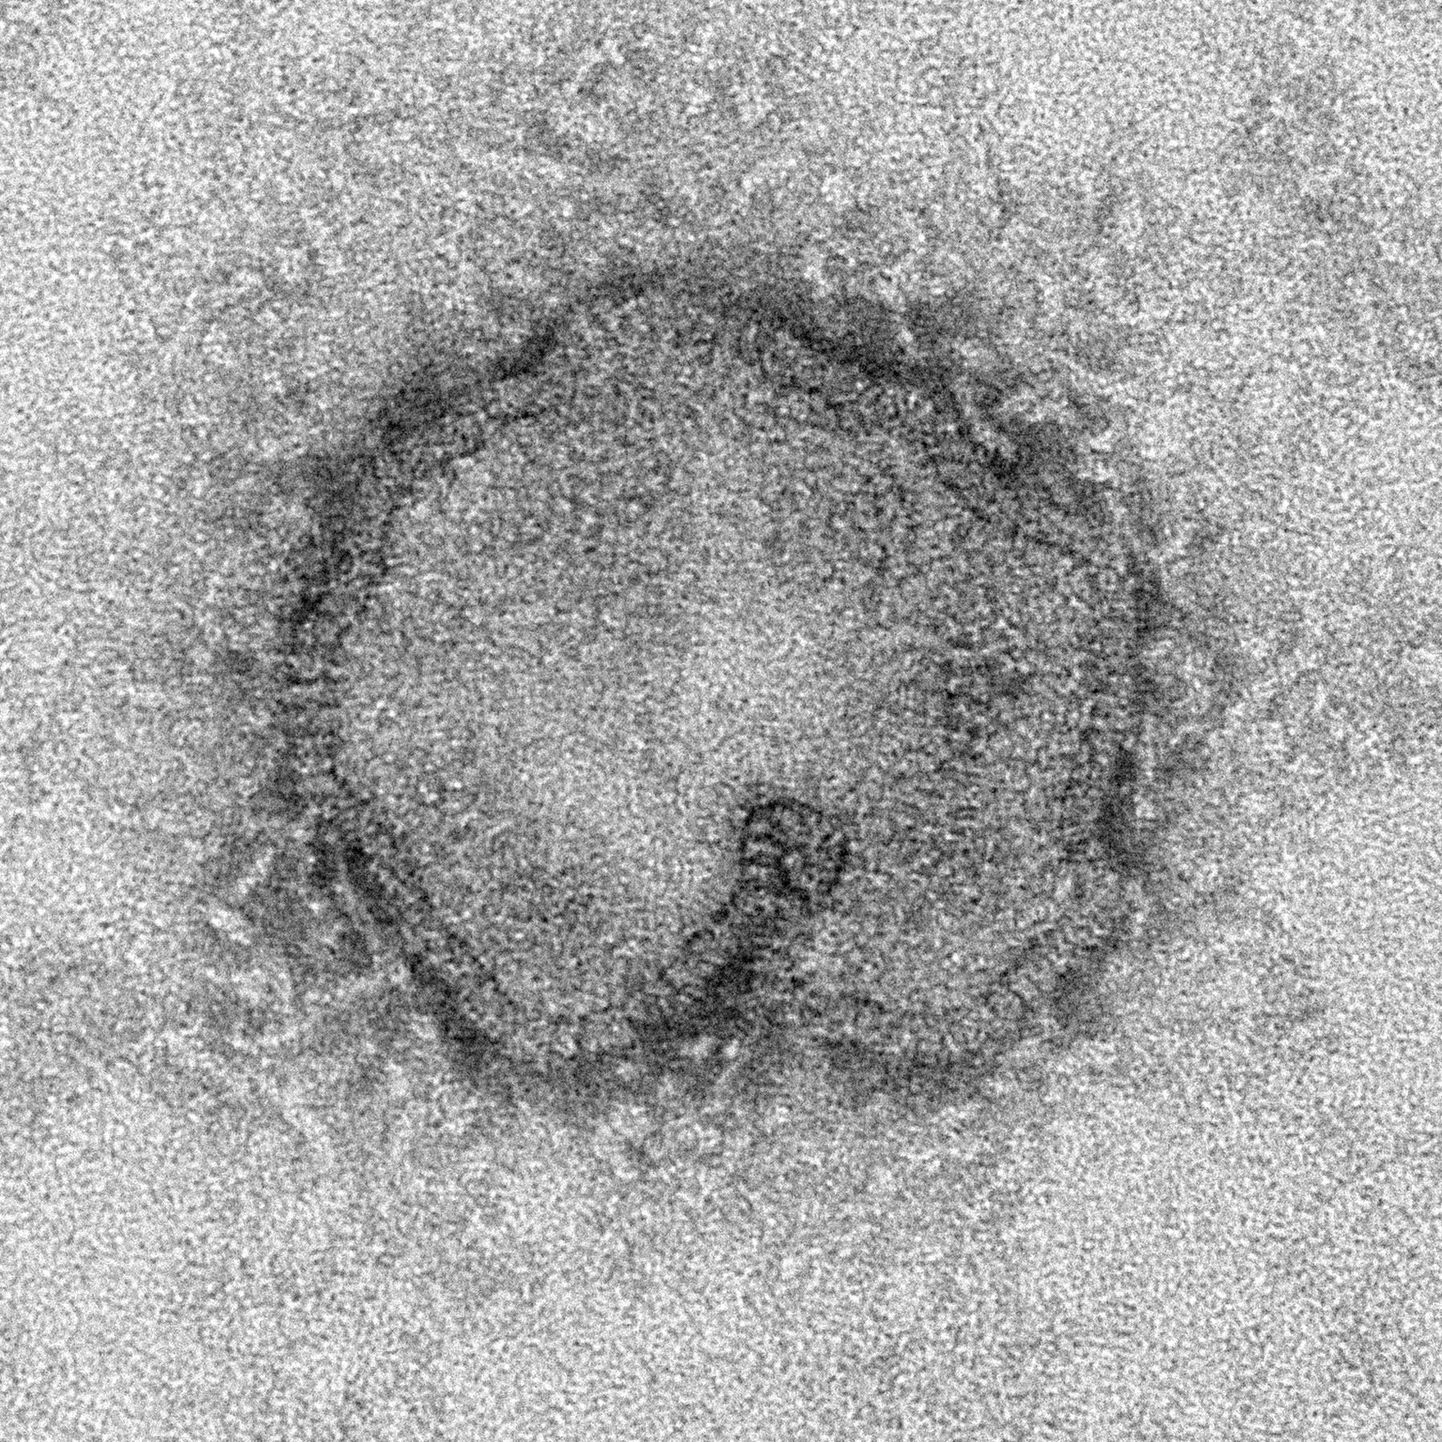 H7N9 viirus